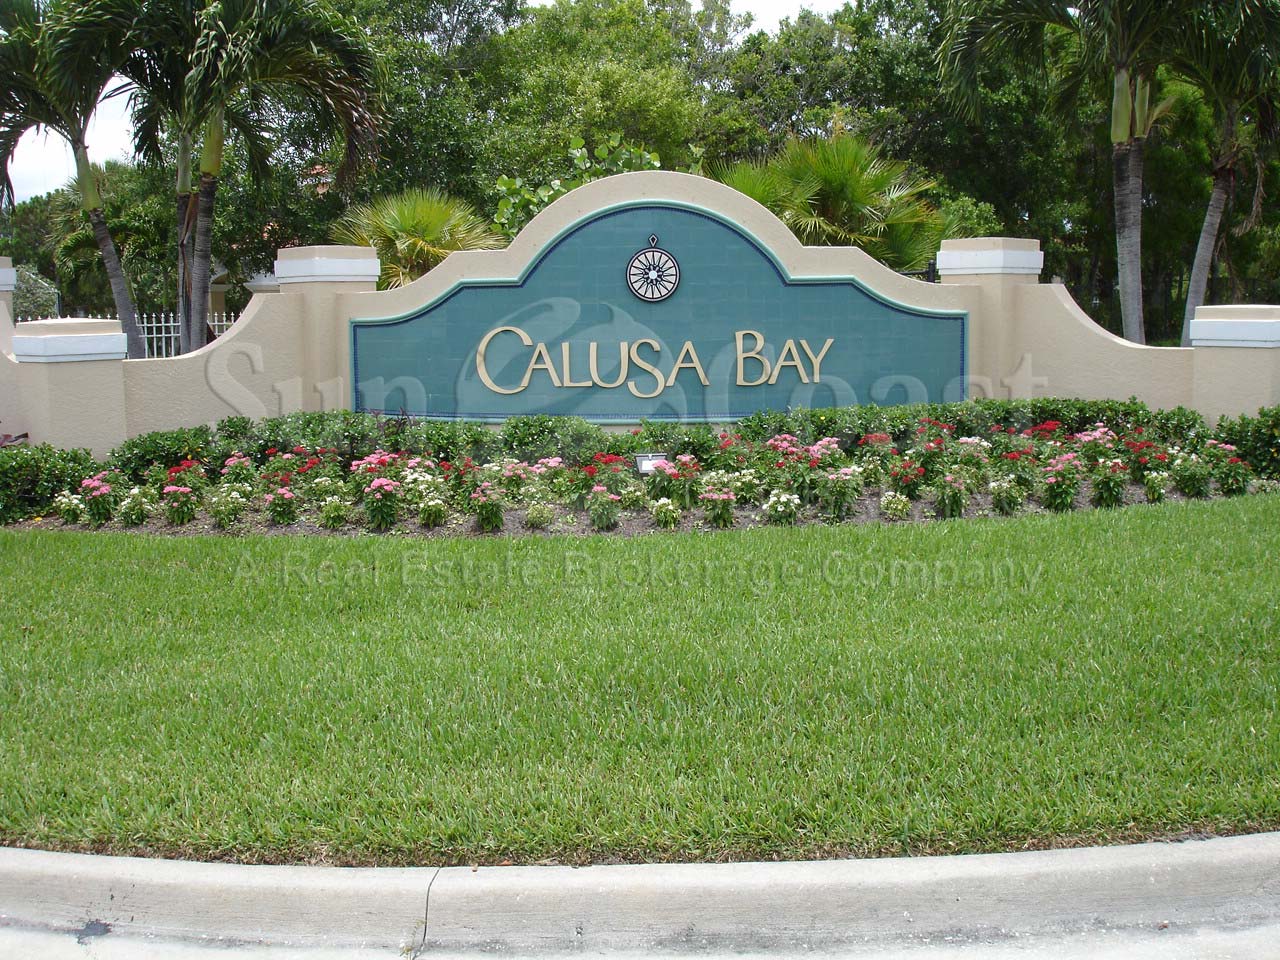 Calusa Bay sign